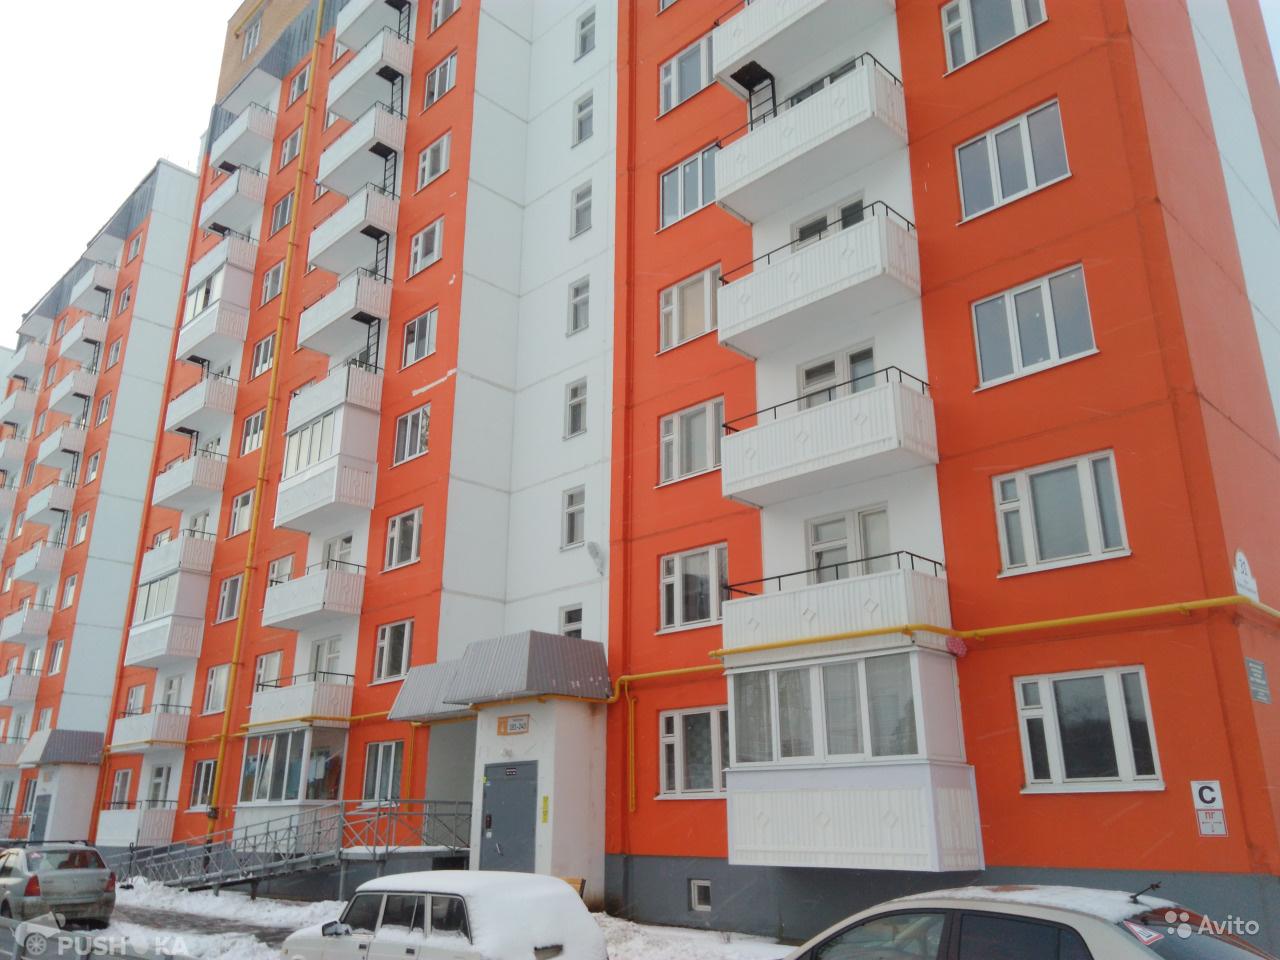 Продаётся 1-комнатная квартира 37.7 кв.м. этаж 9/10 за 2 750 000 руб 